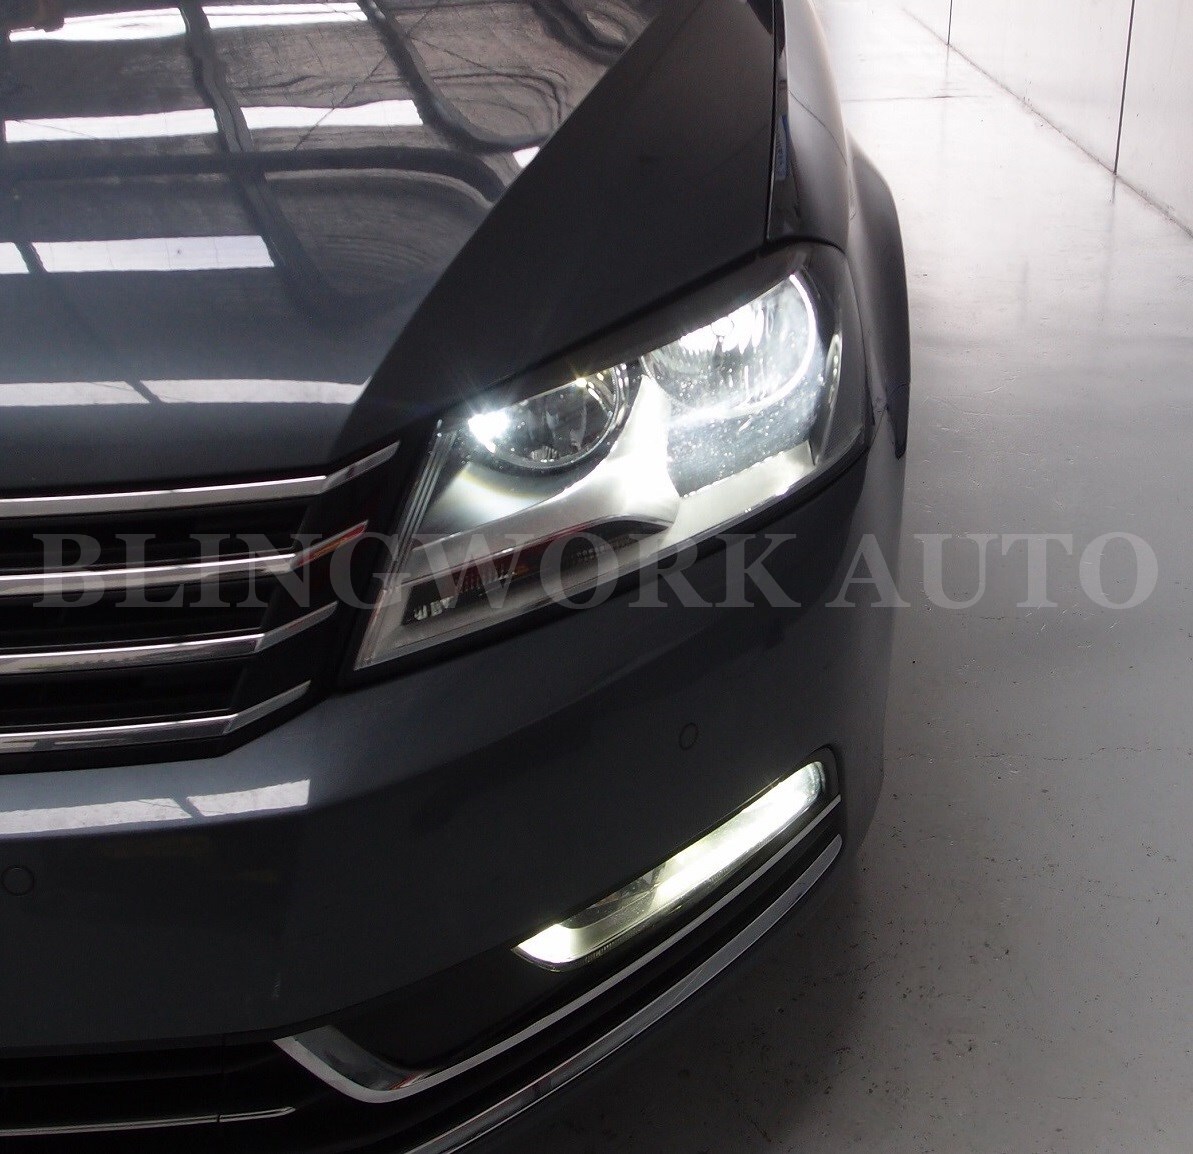 2011-2015 Volkswagen Passat Sedan LED Low Fog Light DRL Conversion Kit